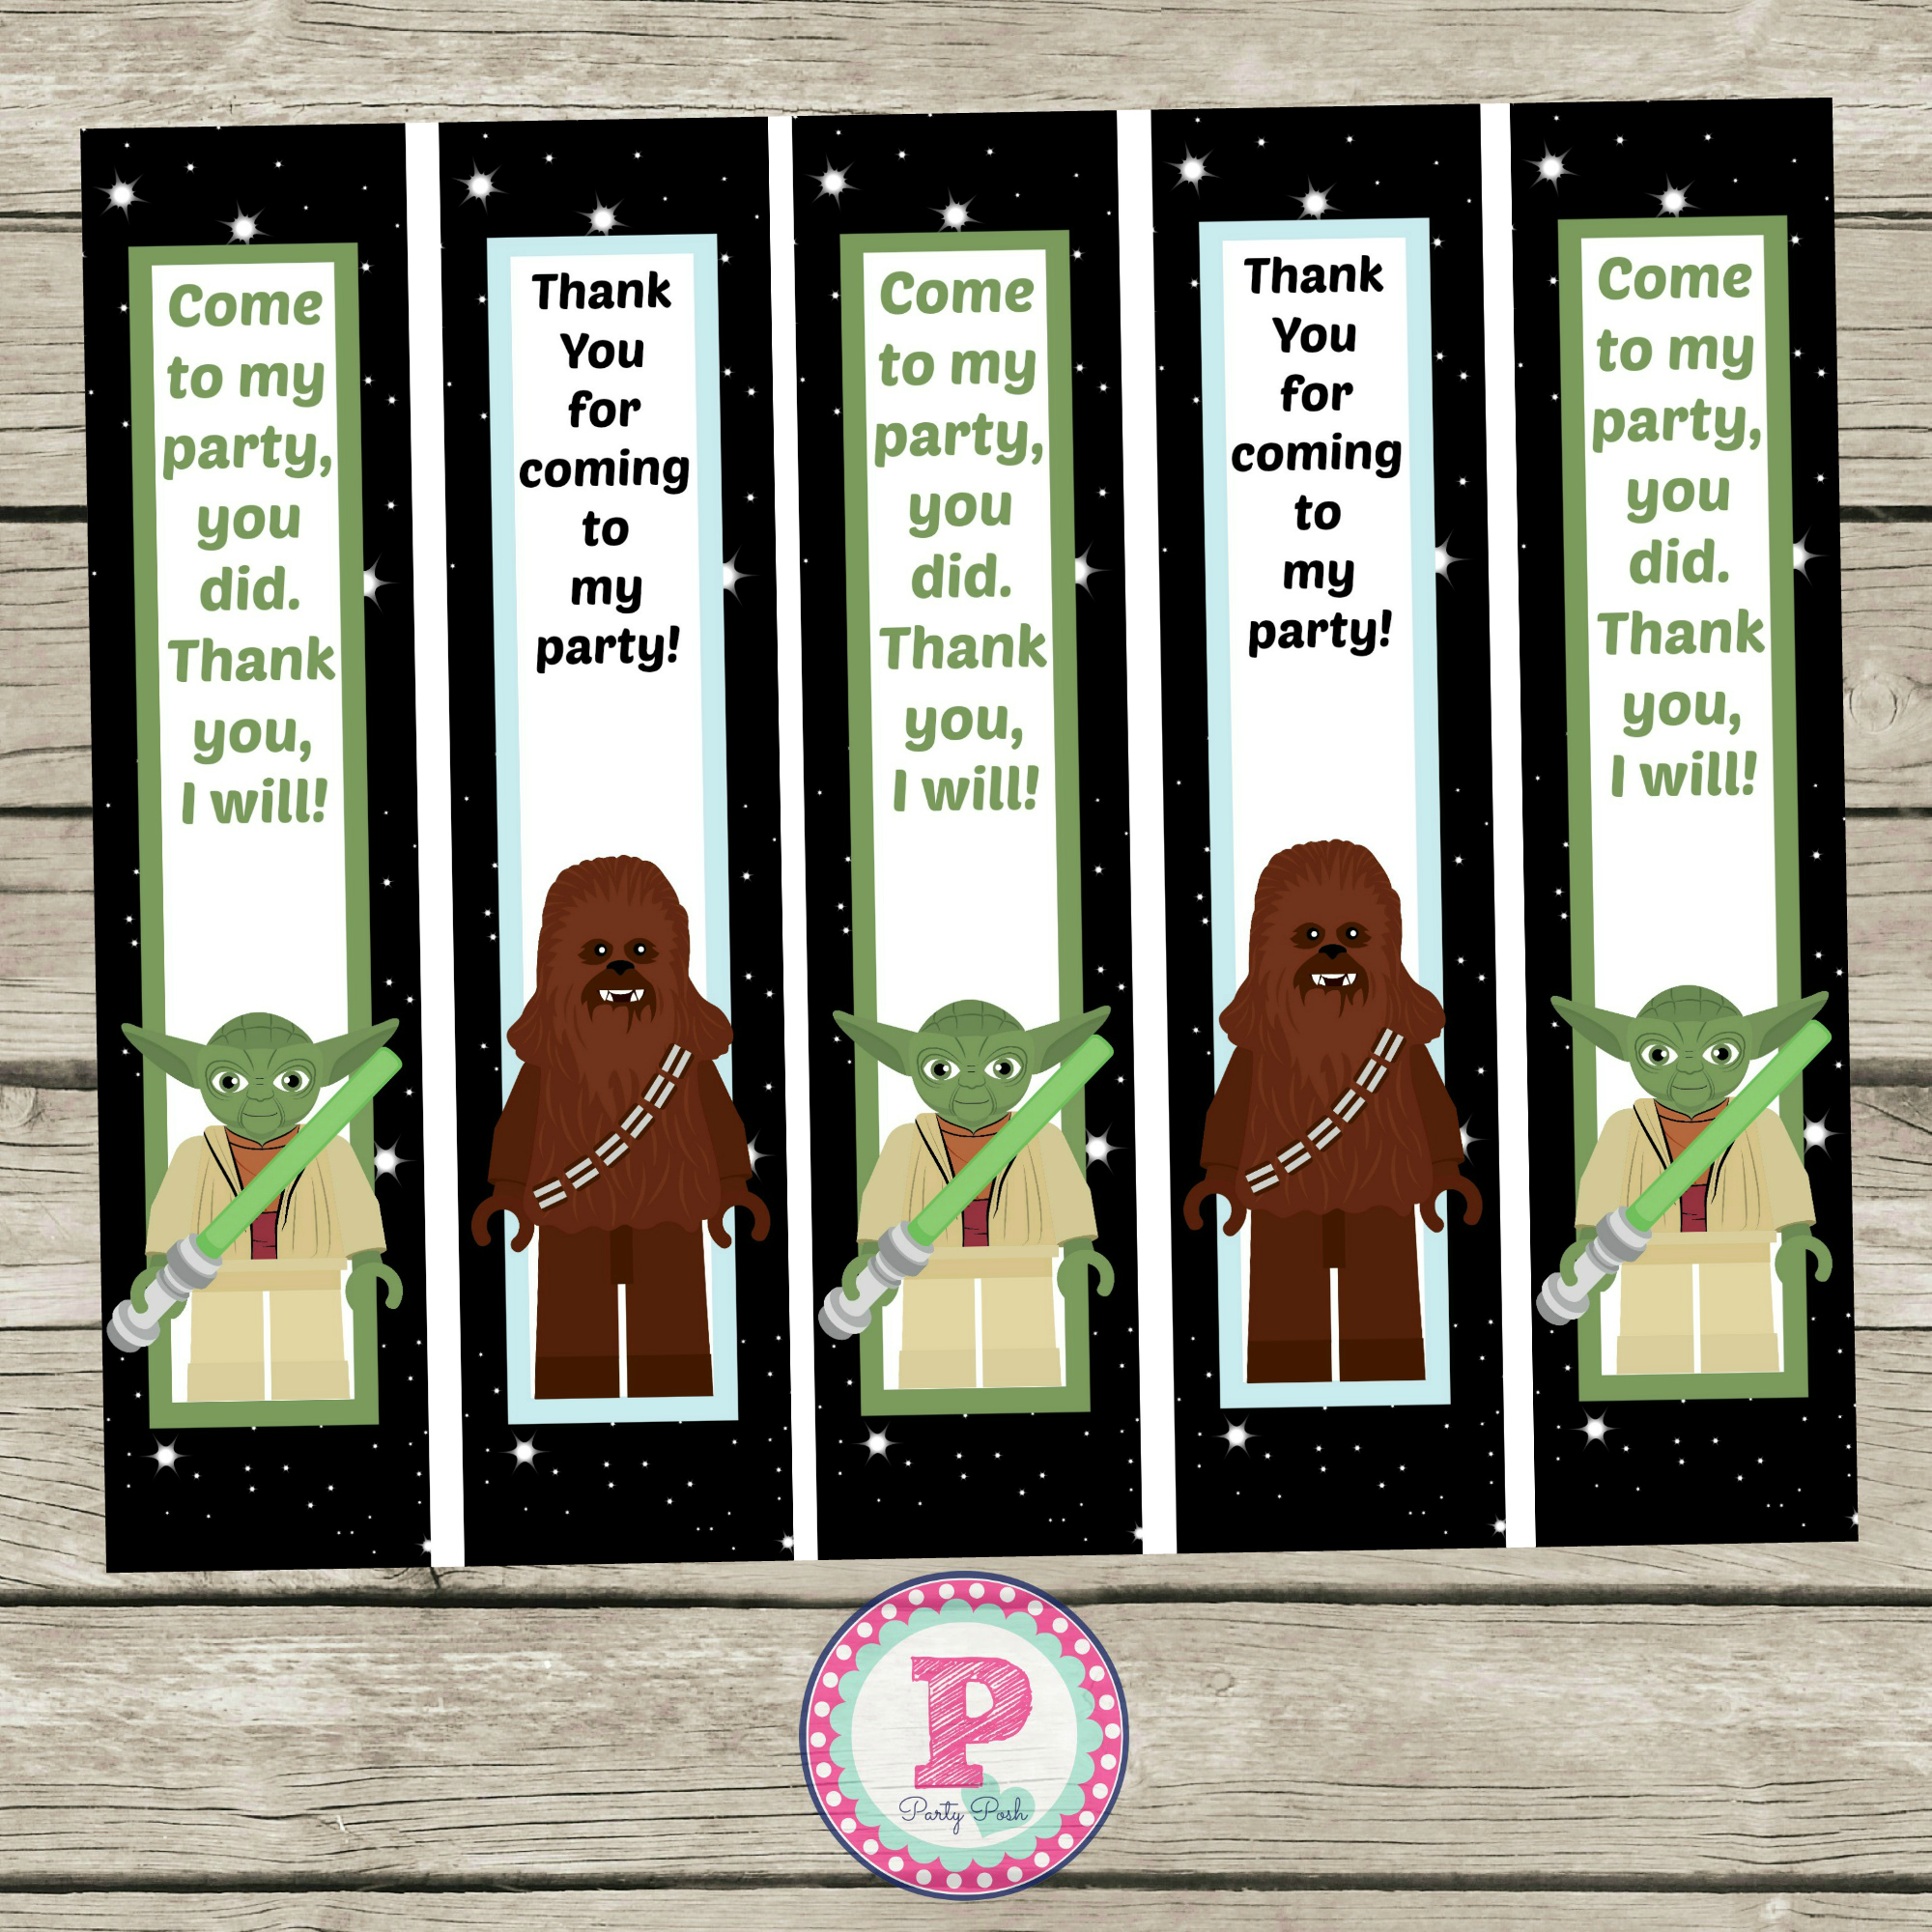 7 Best Images of Star Wars Printable Bookmarks Star Wars Bookmarks